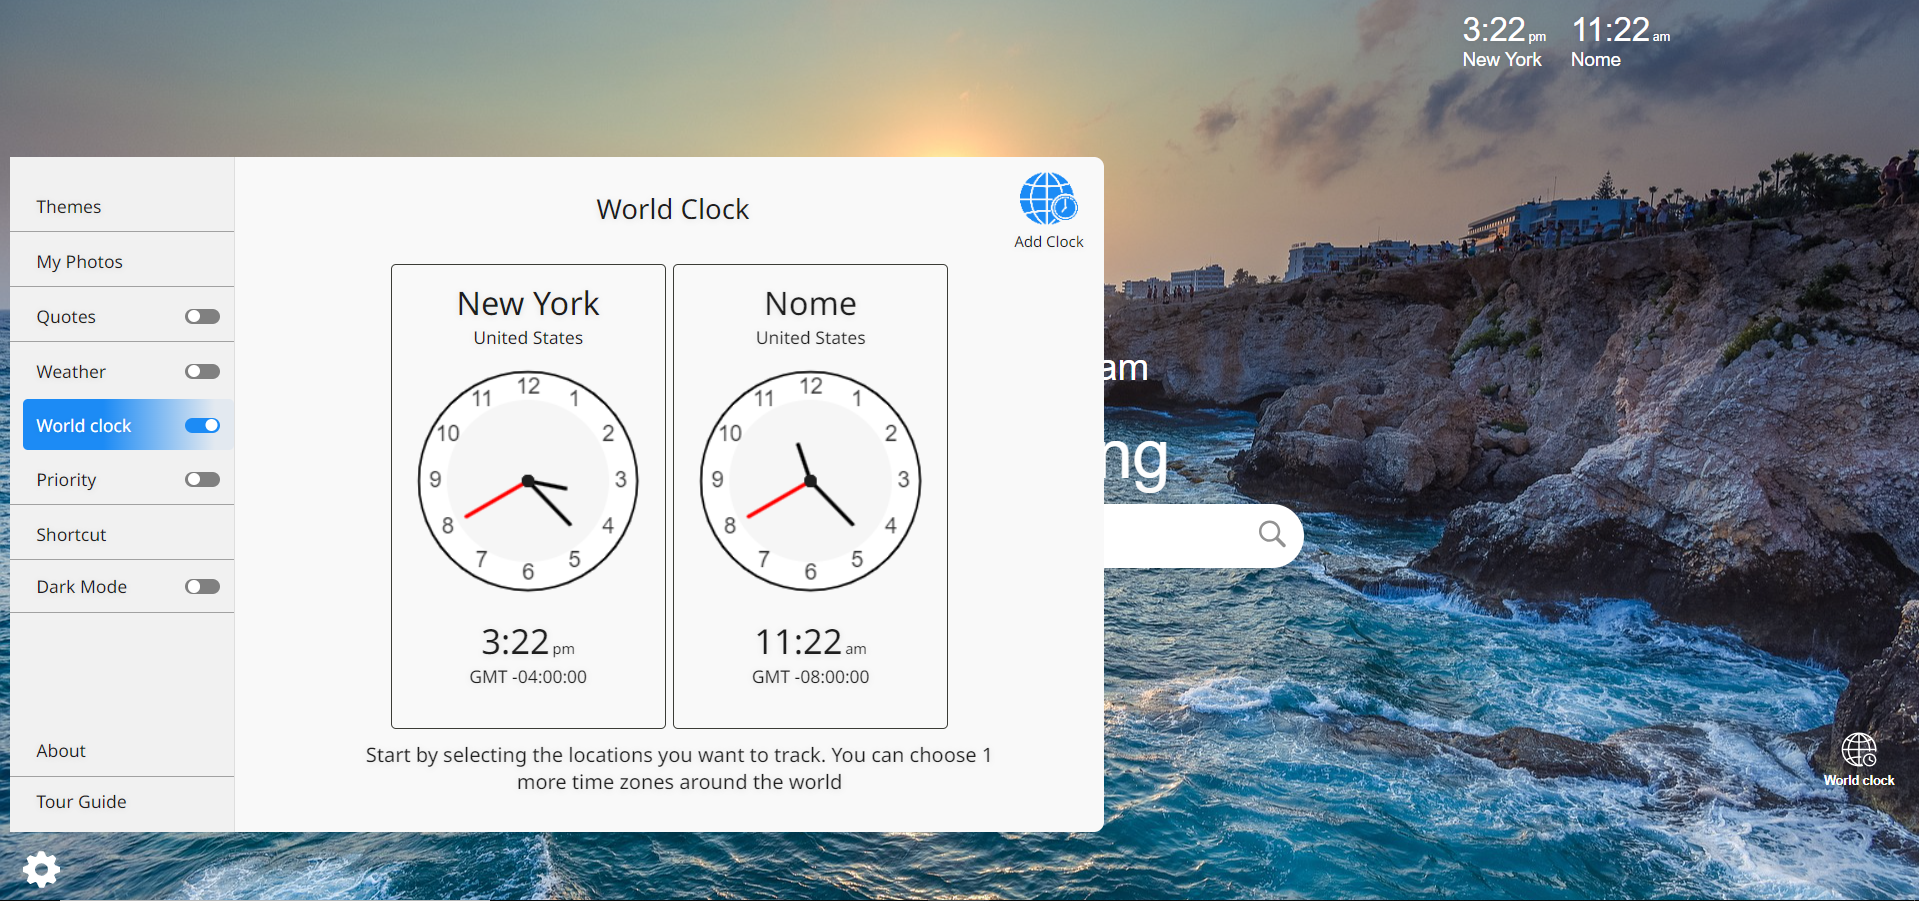 Emerge world clock chrome extension screenshot.